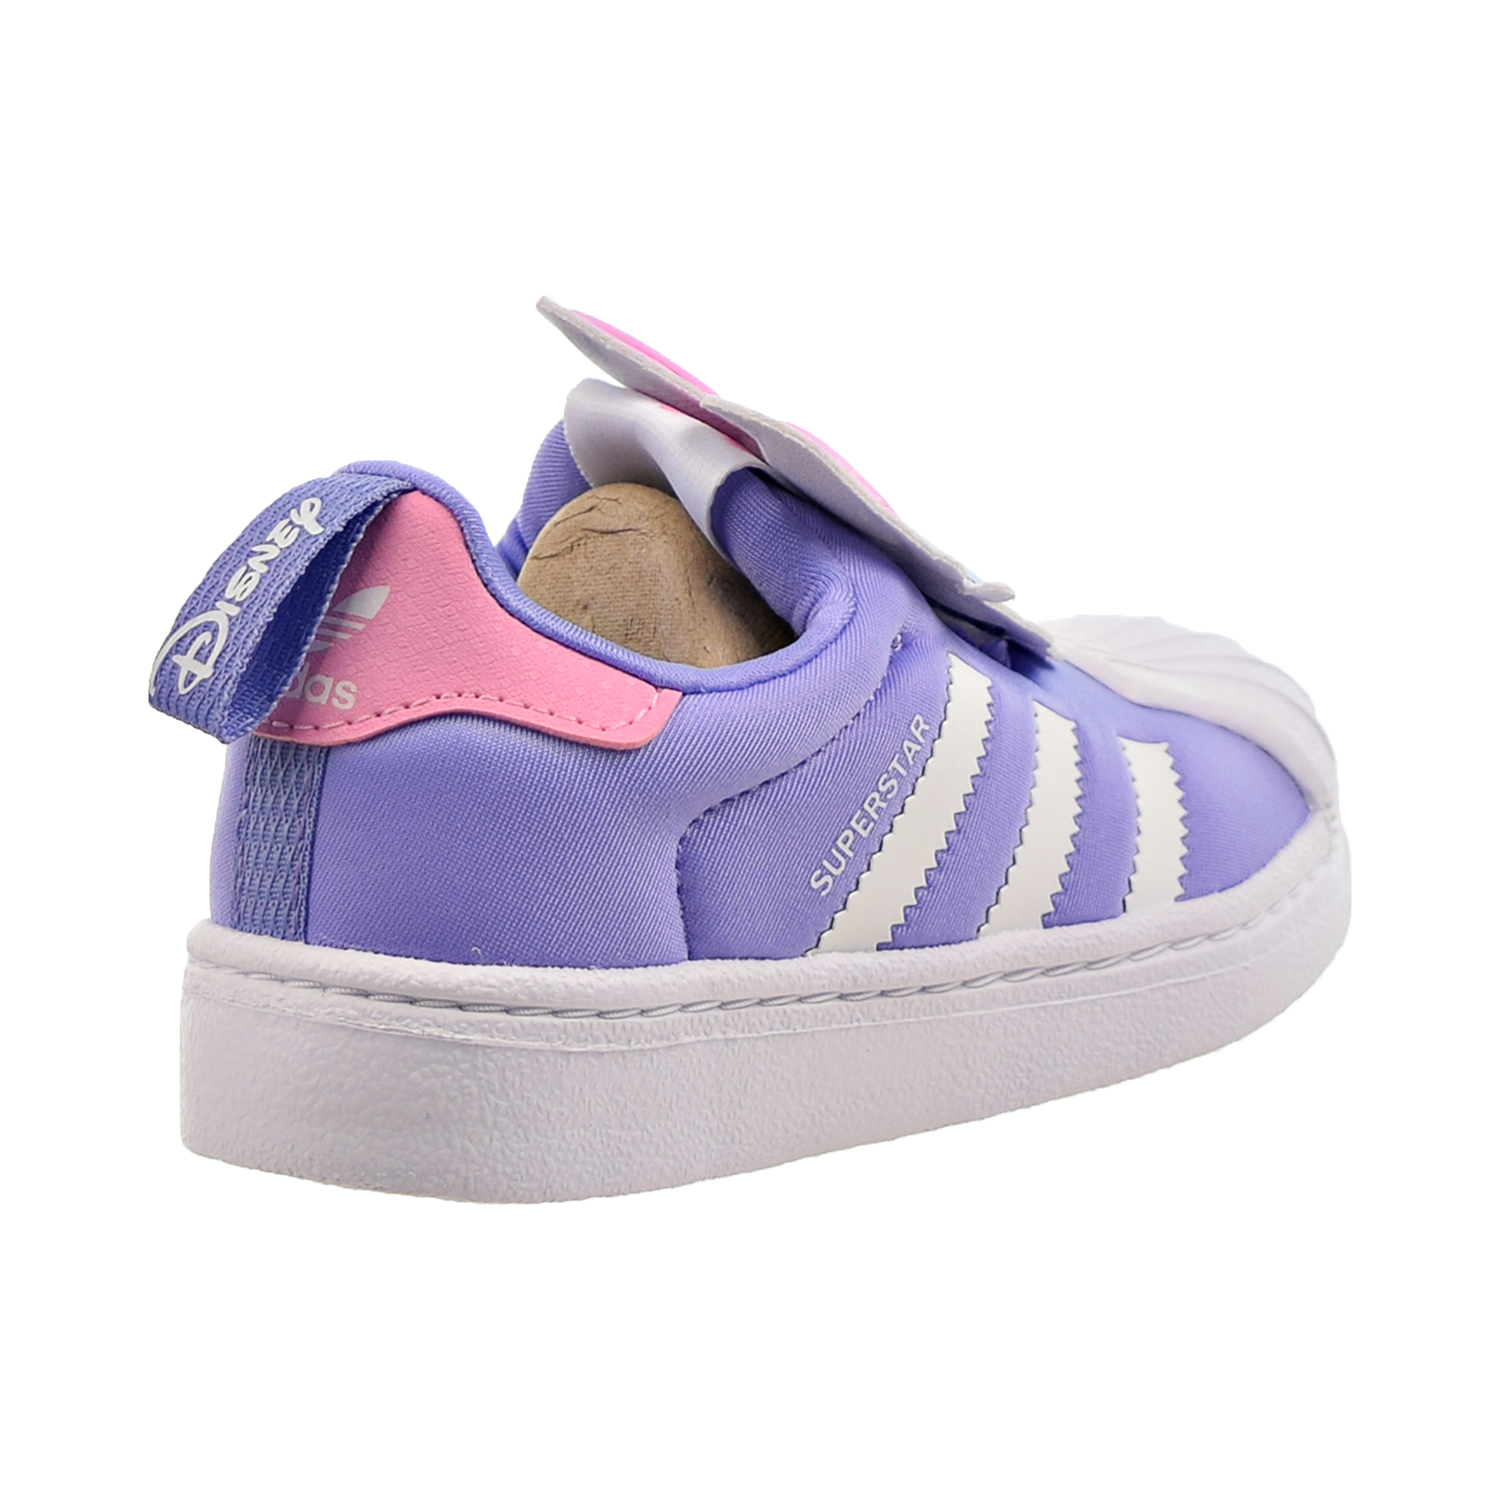 Adidas Disney Superstar 360 "Daisy Duck" Little Kids' Shoes Cloud White-Purple gx3275